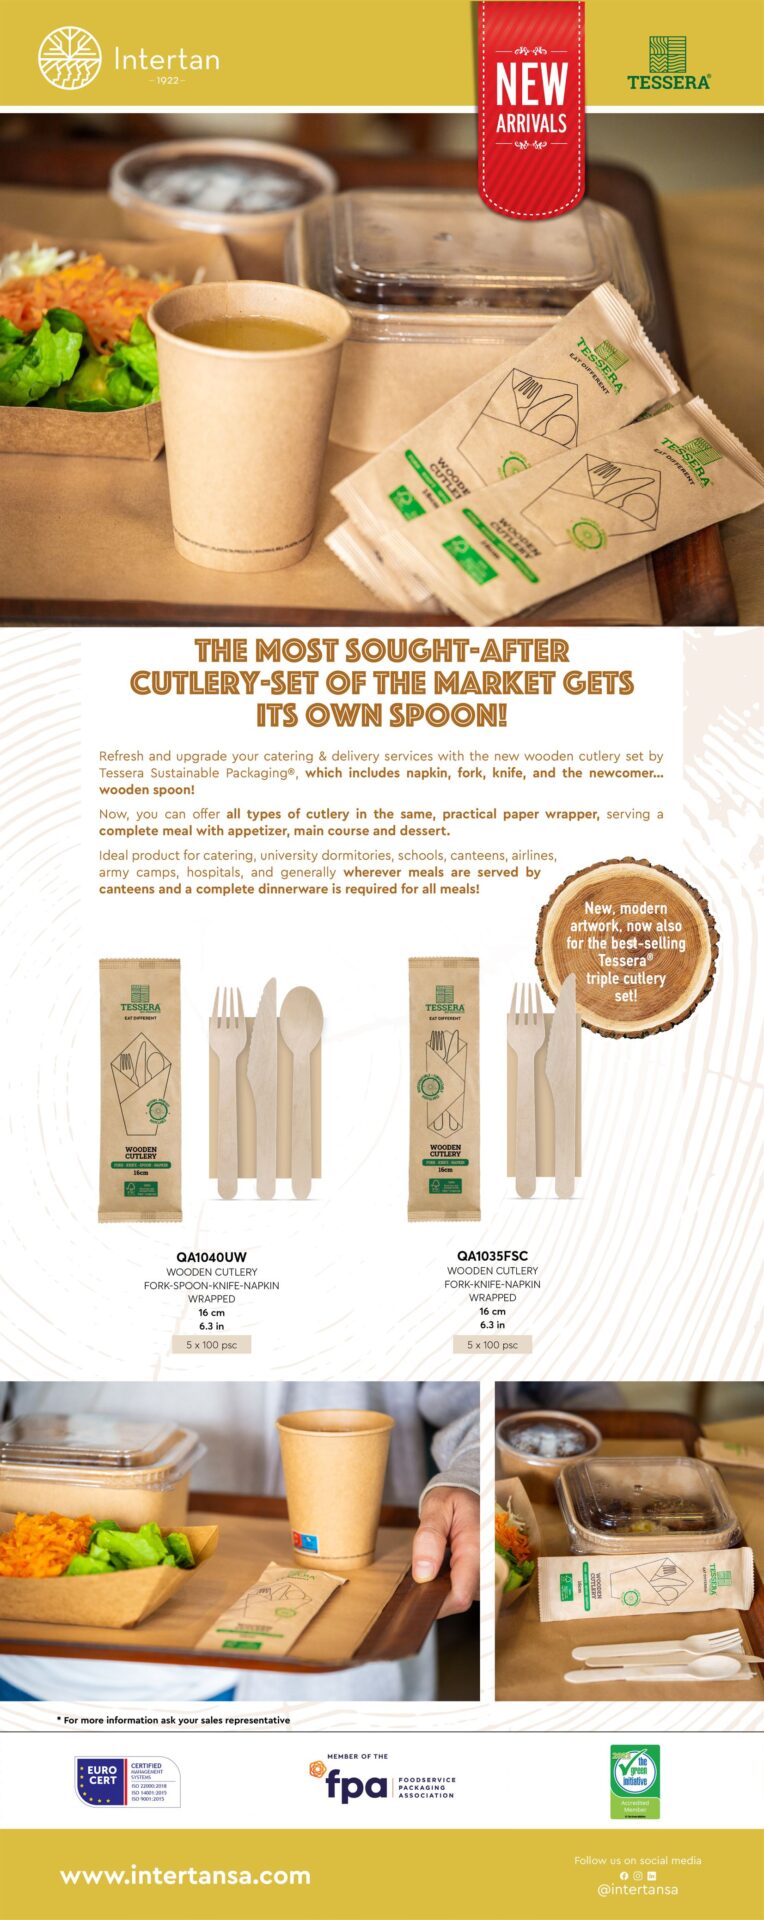 New TESSERA 4-piece wooden cutlery set with spoon Newsletter | Intertan S.A.